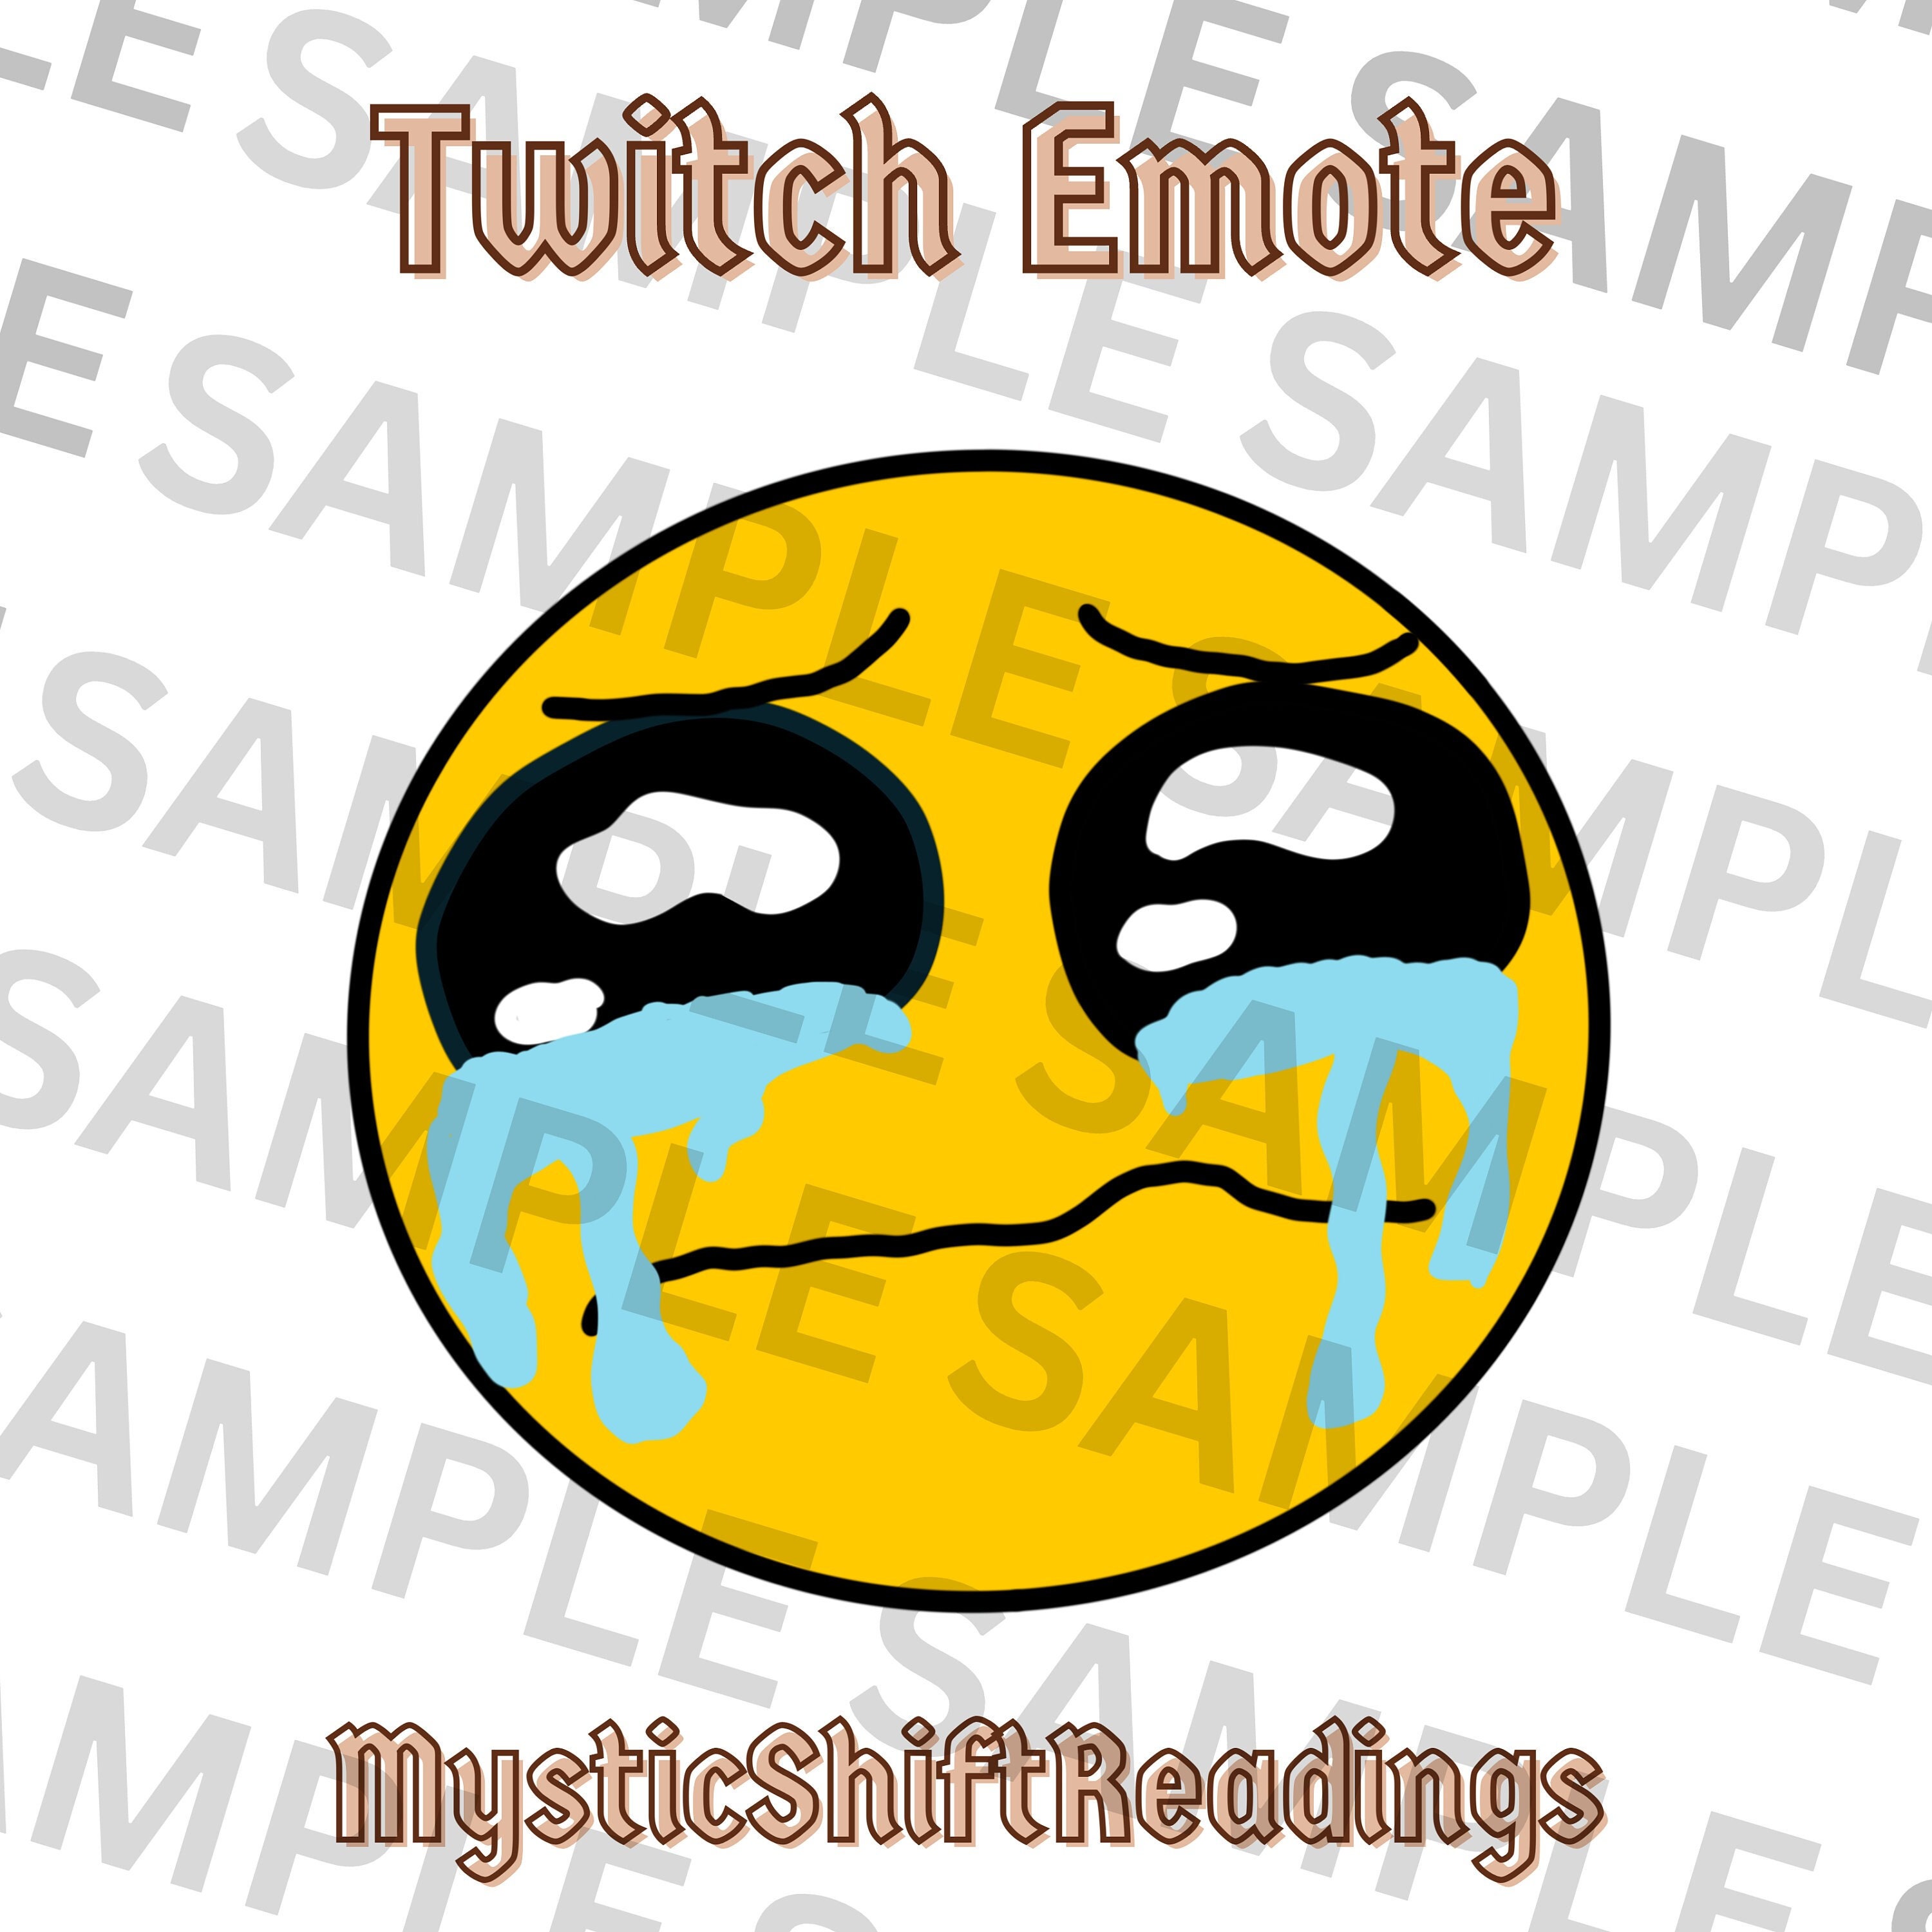 Stream Crying Cursed Emoji over EXPURGATION (No gameplay noises) by  Psychosmile